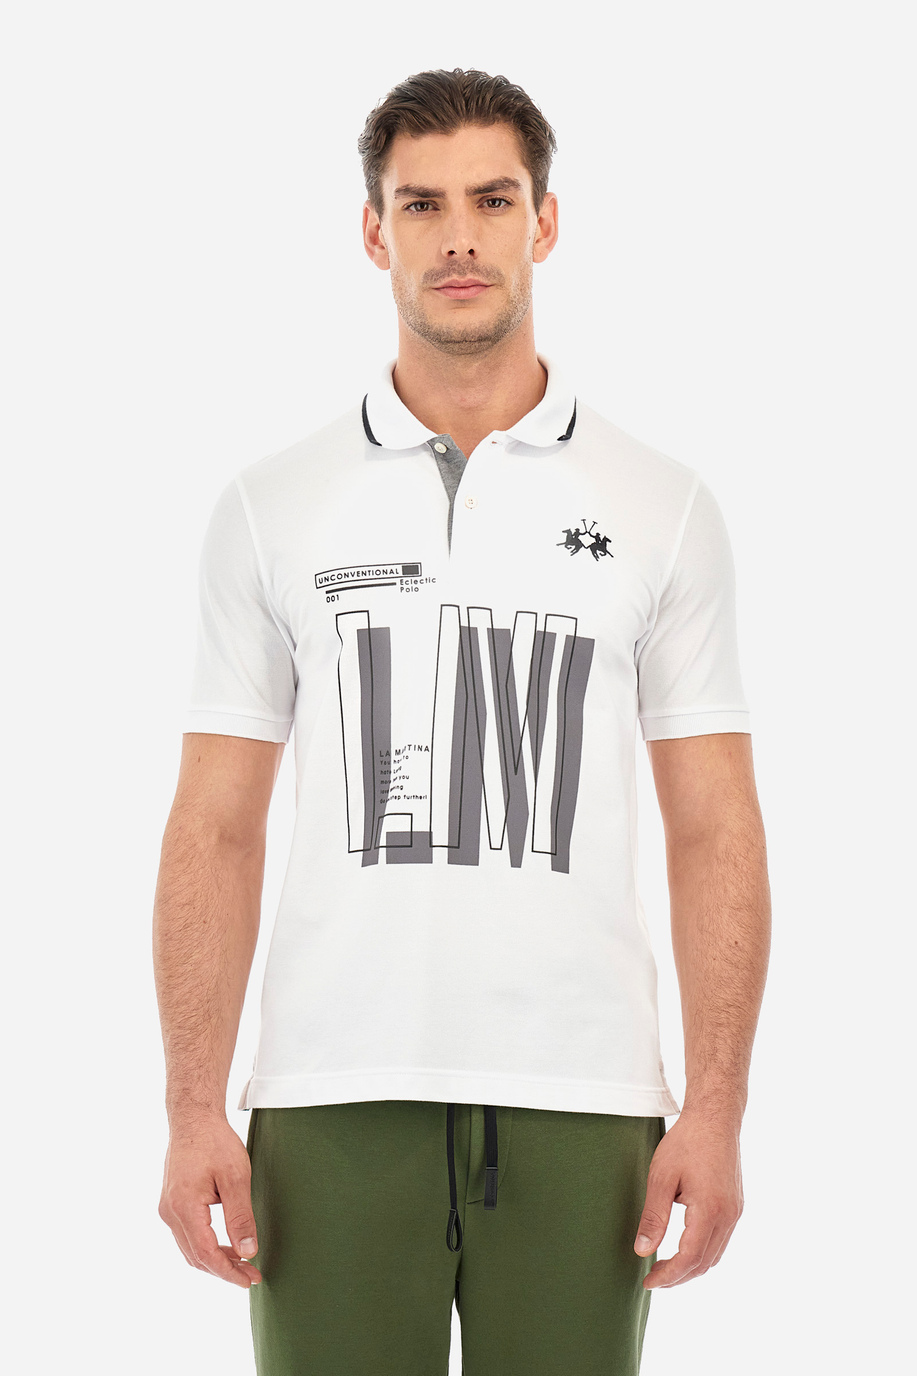 Men's polo shirt in a regular fit - Willett - test 2 | La Martina - Official Online Shop